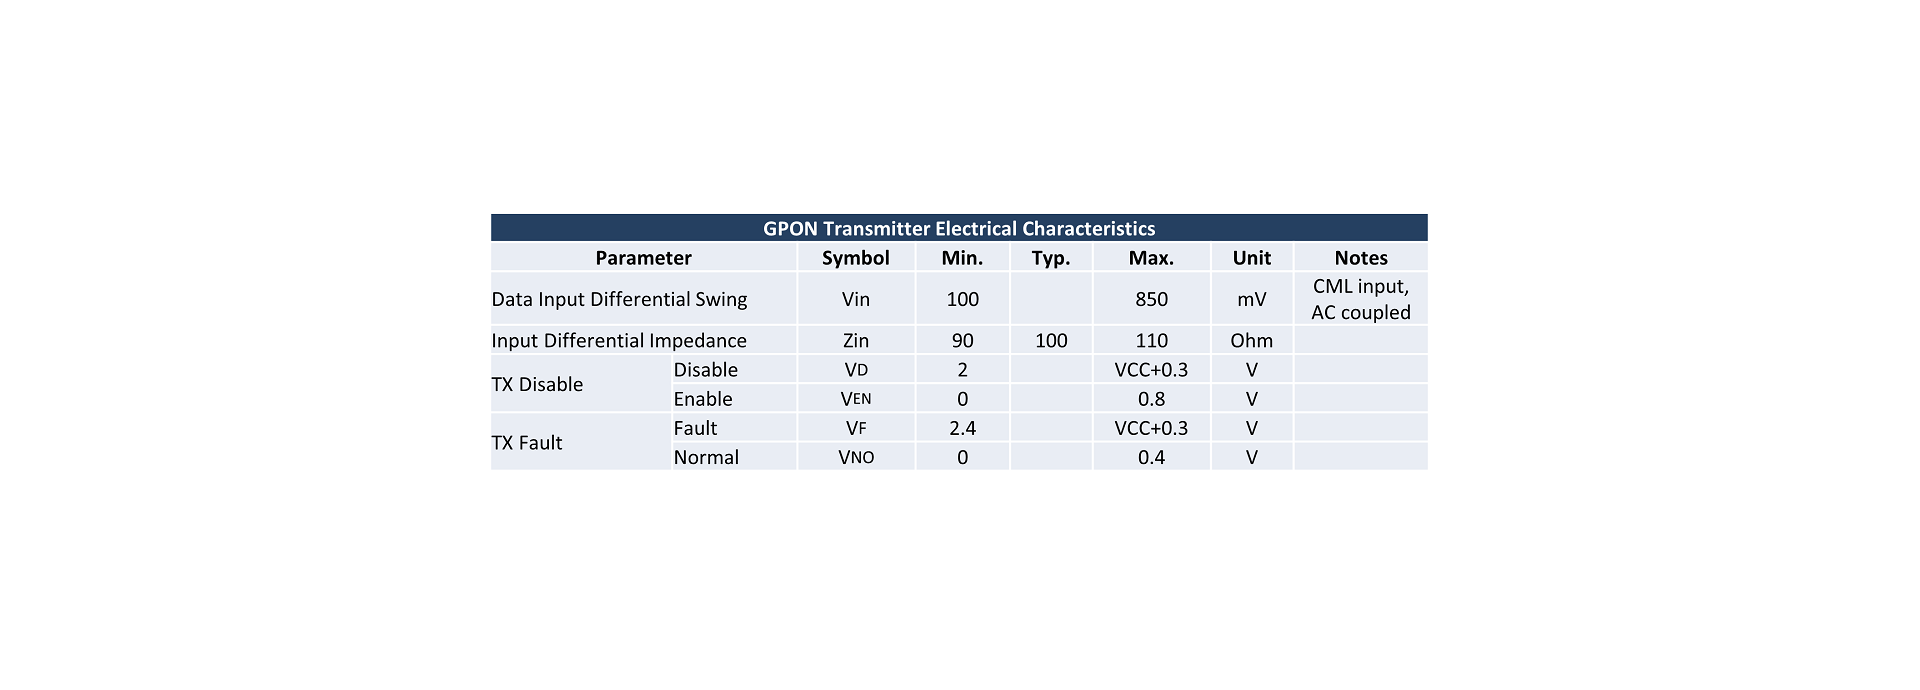 GPON Transmitter Electrical Characteristics